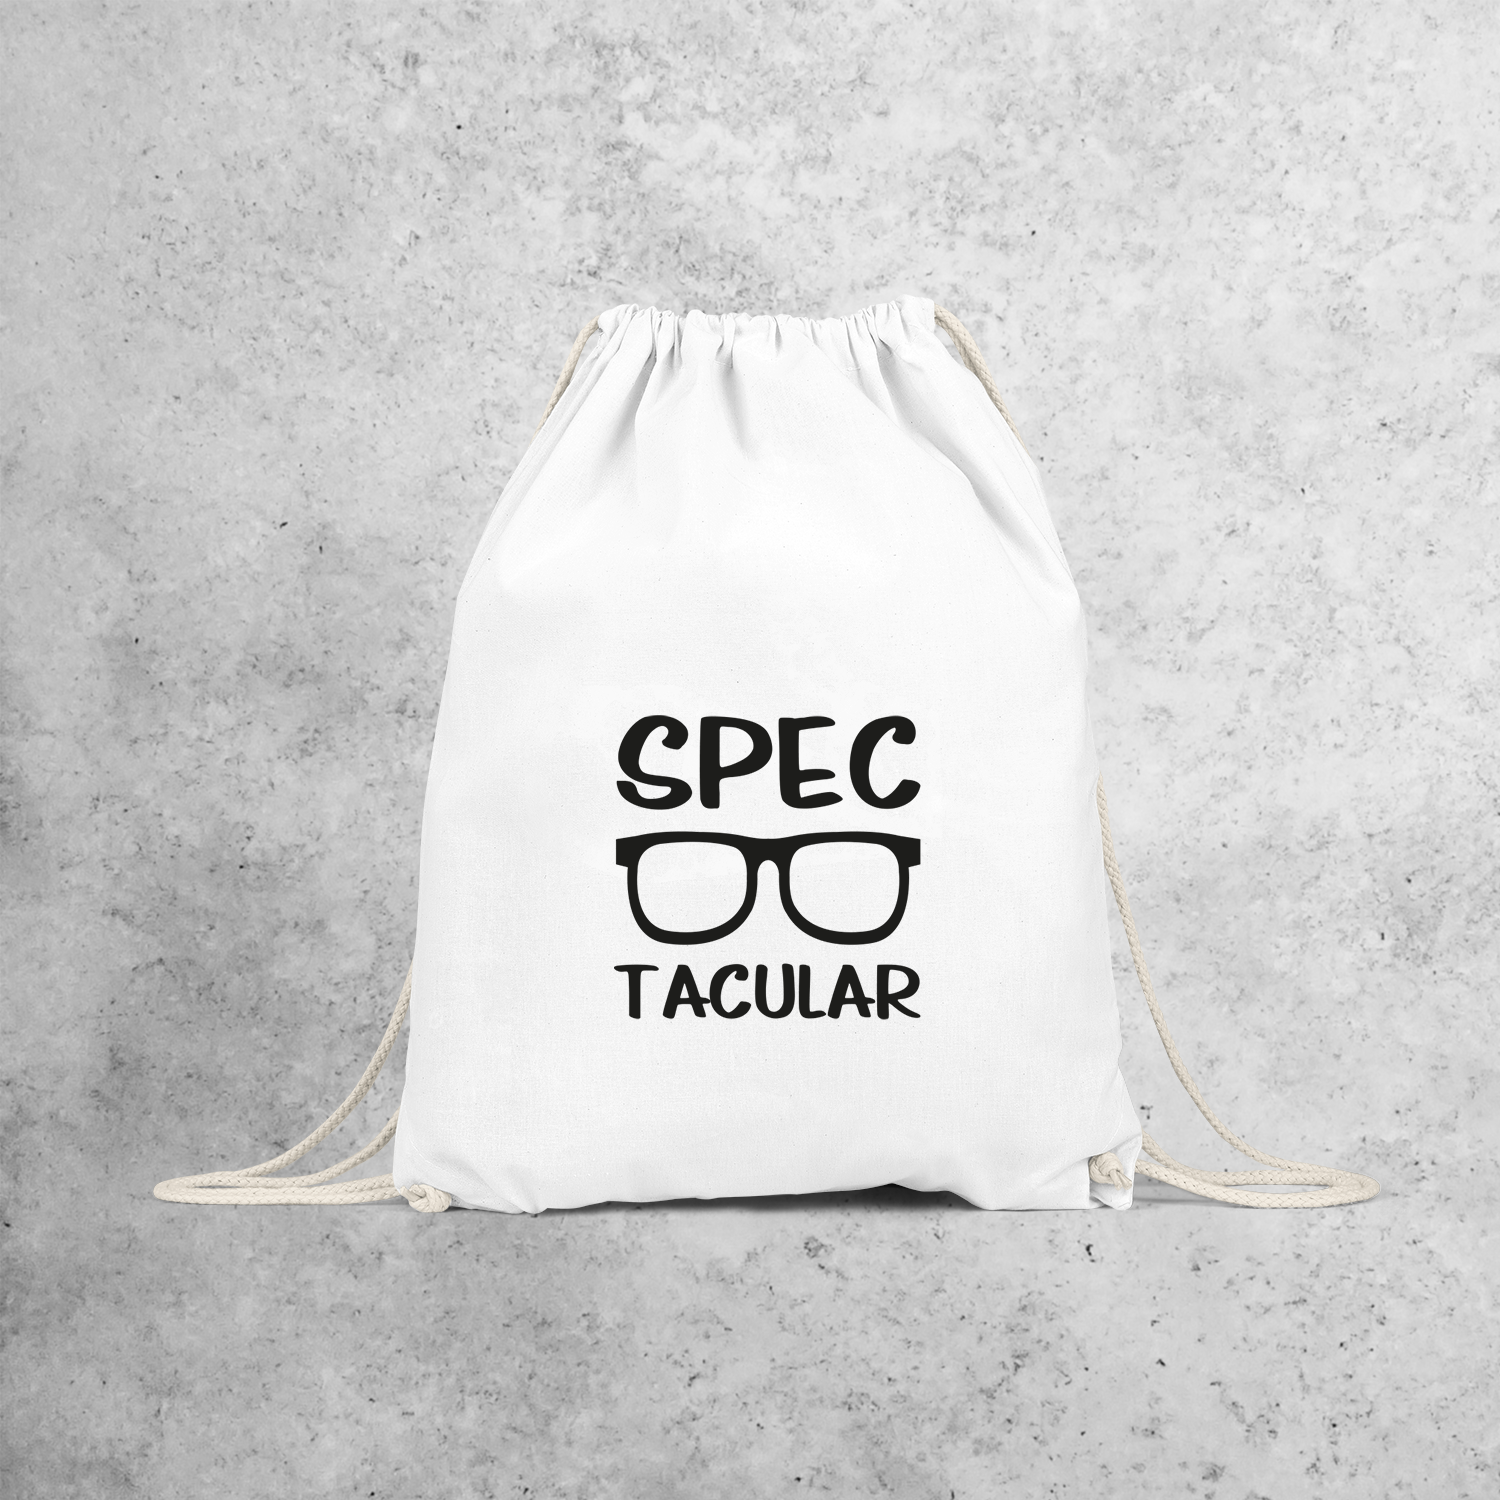 'Spectacular' backpack